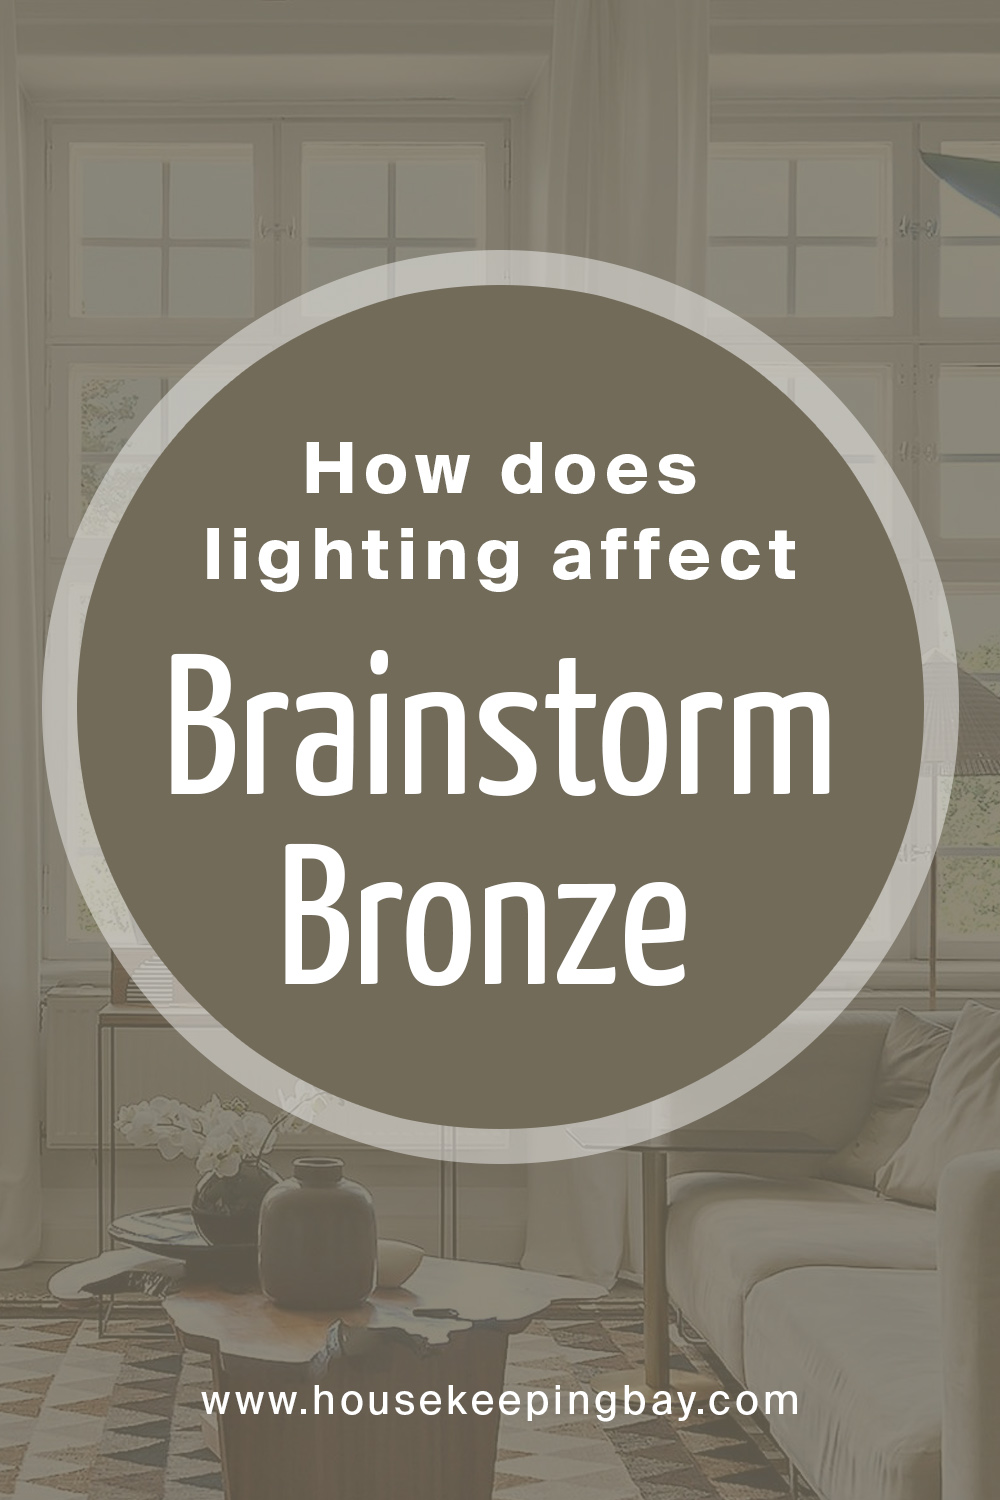 How does lighting affect Brainstorm Bronze